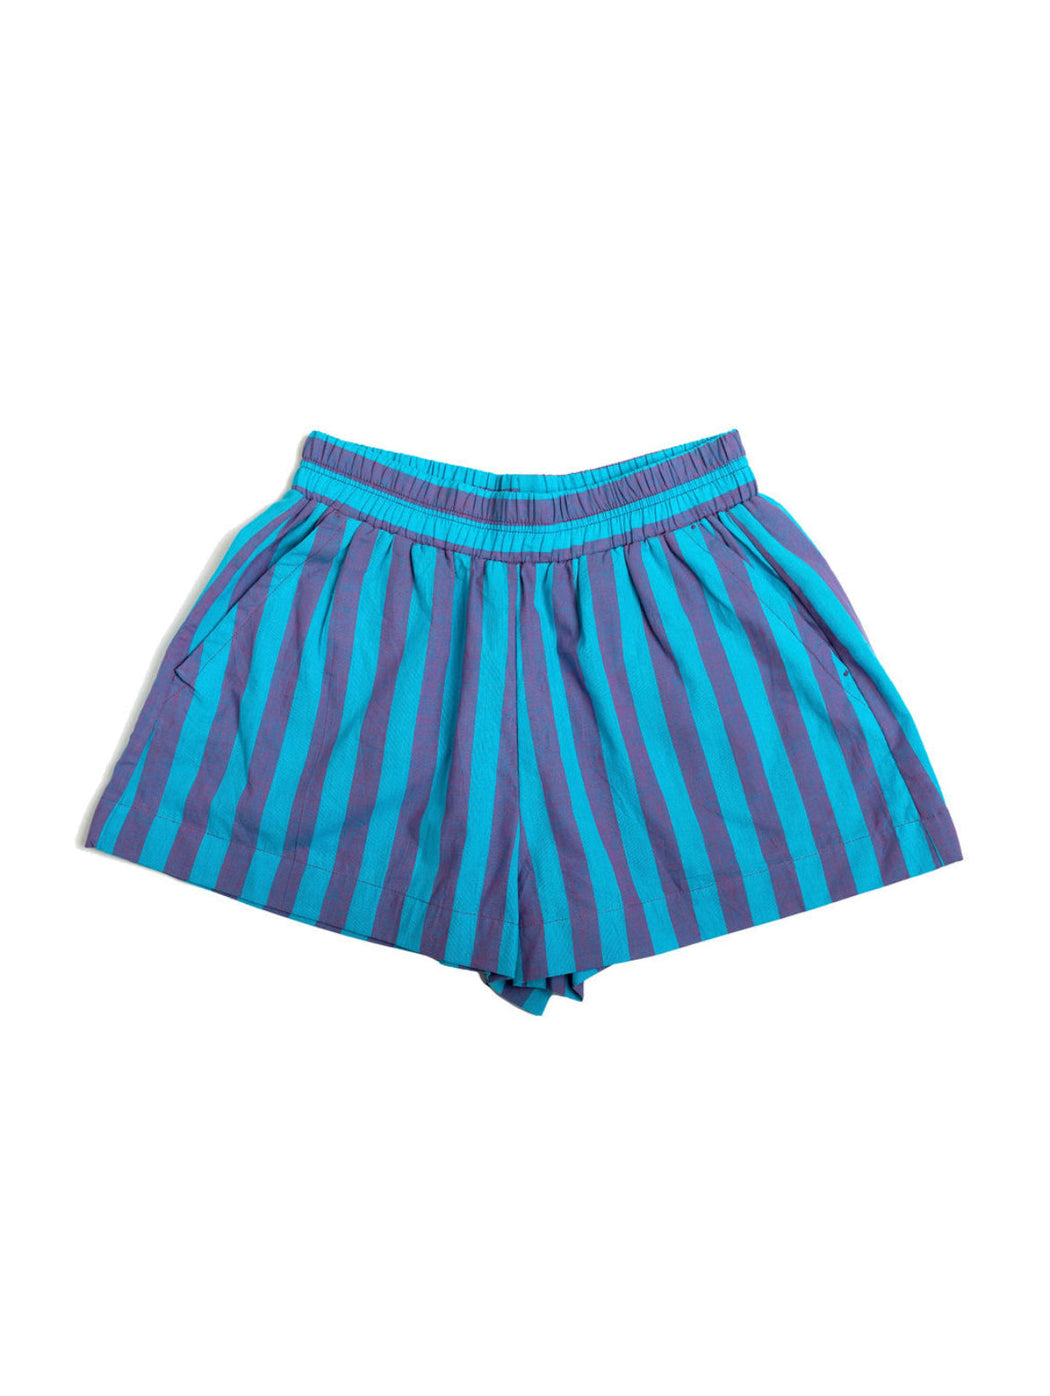 blue vertical striped shorts women's